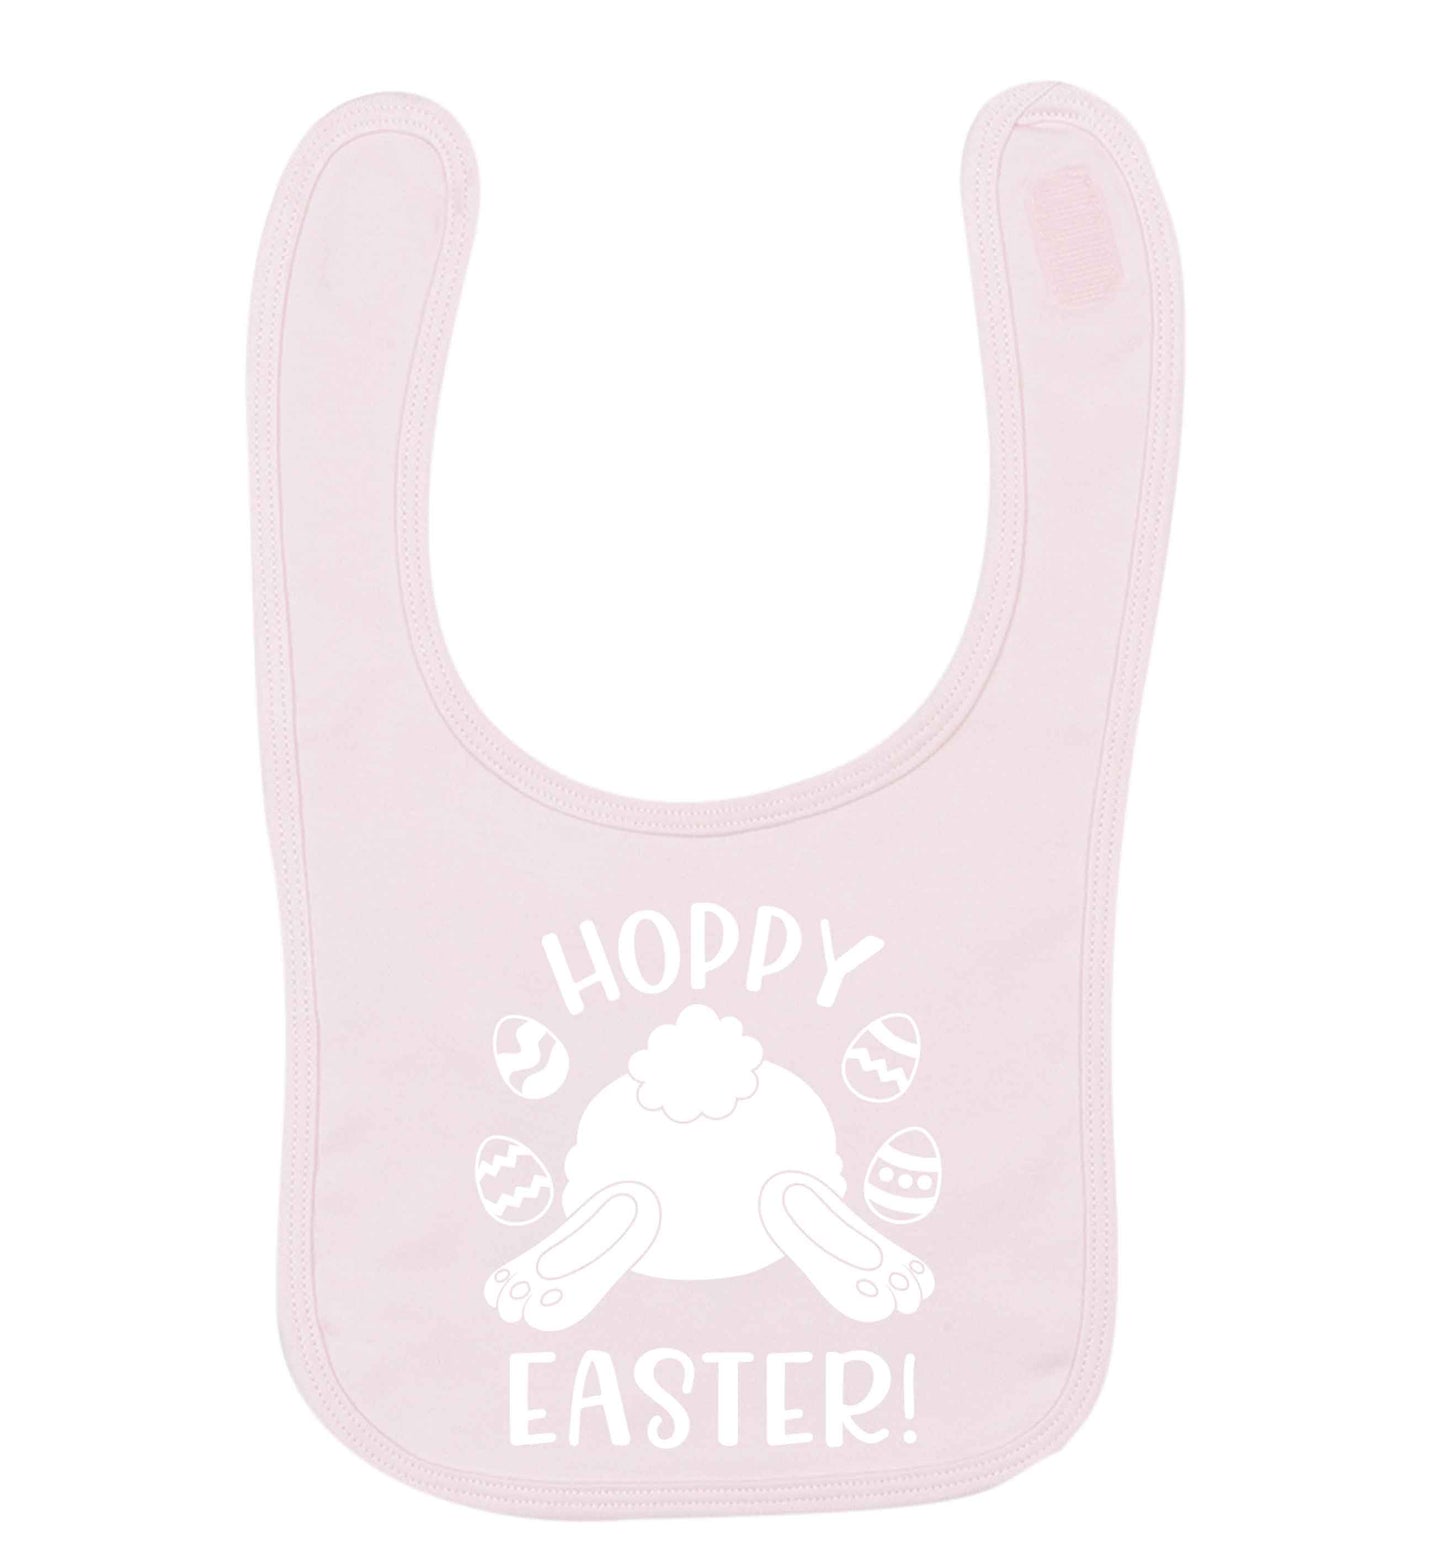 Hoppy Easter pale pink baby bib